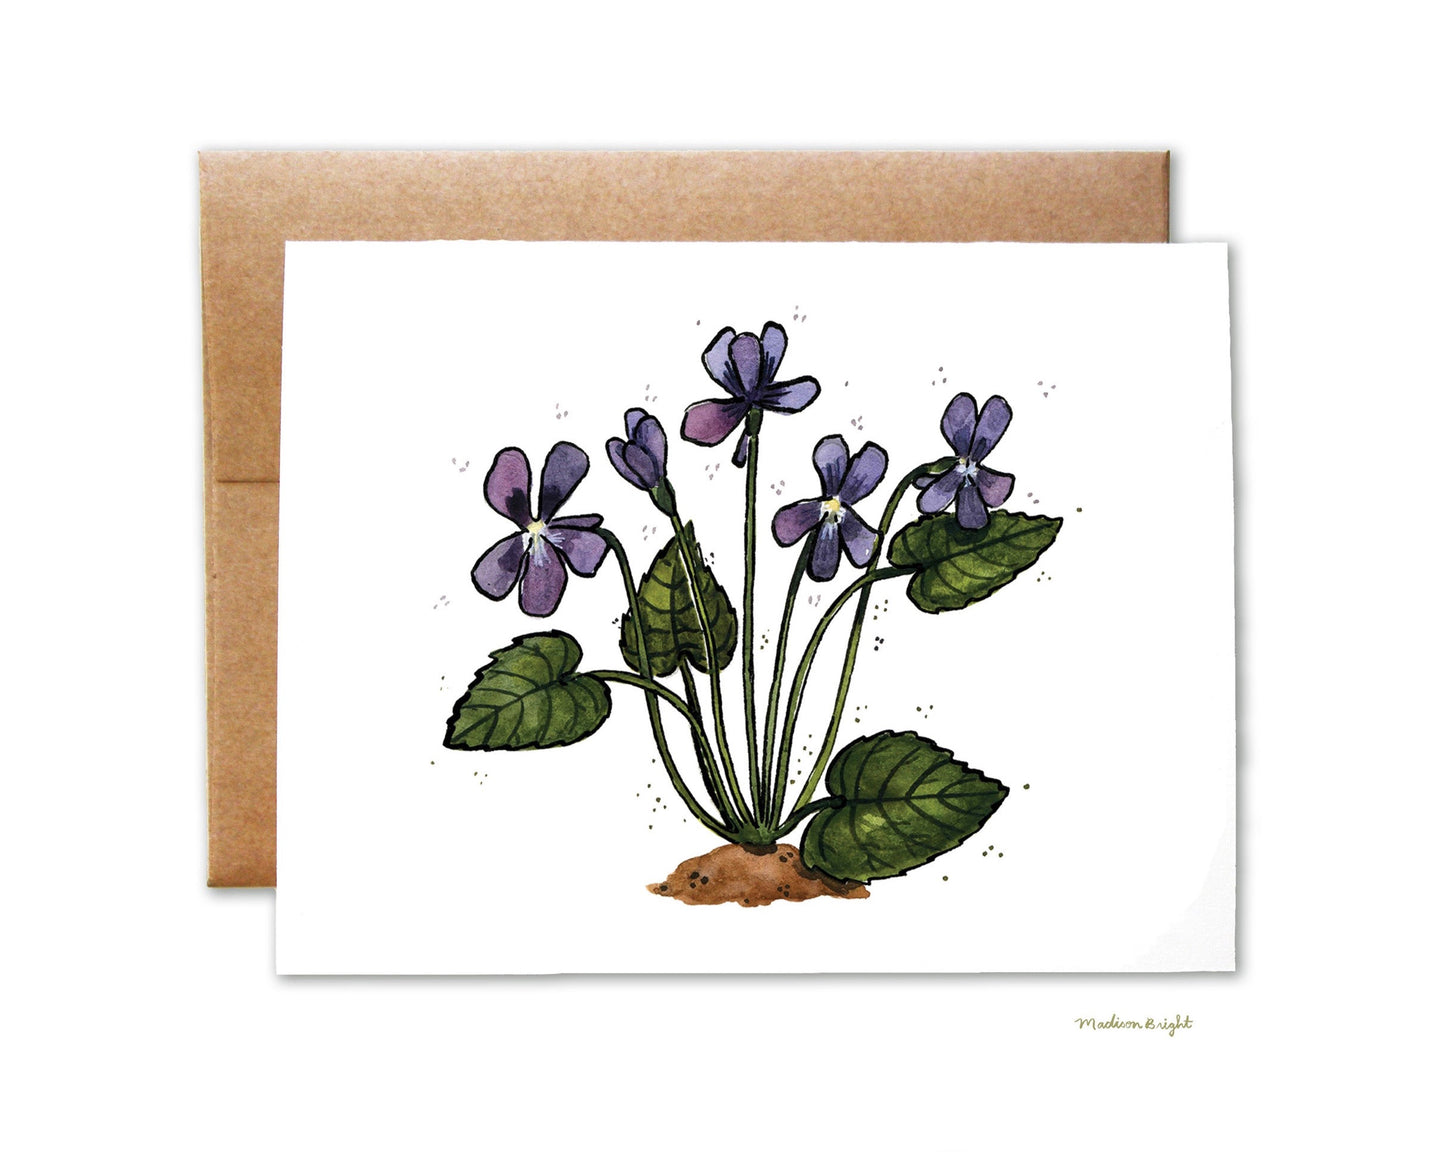 Wood Violets - Greeting Card